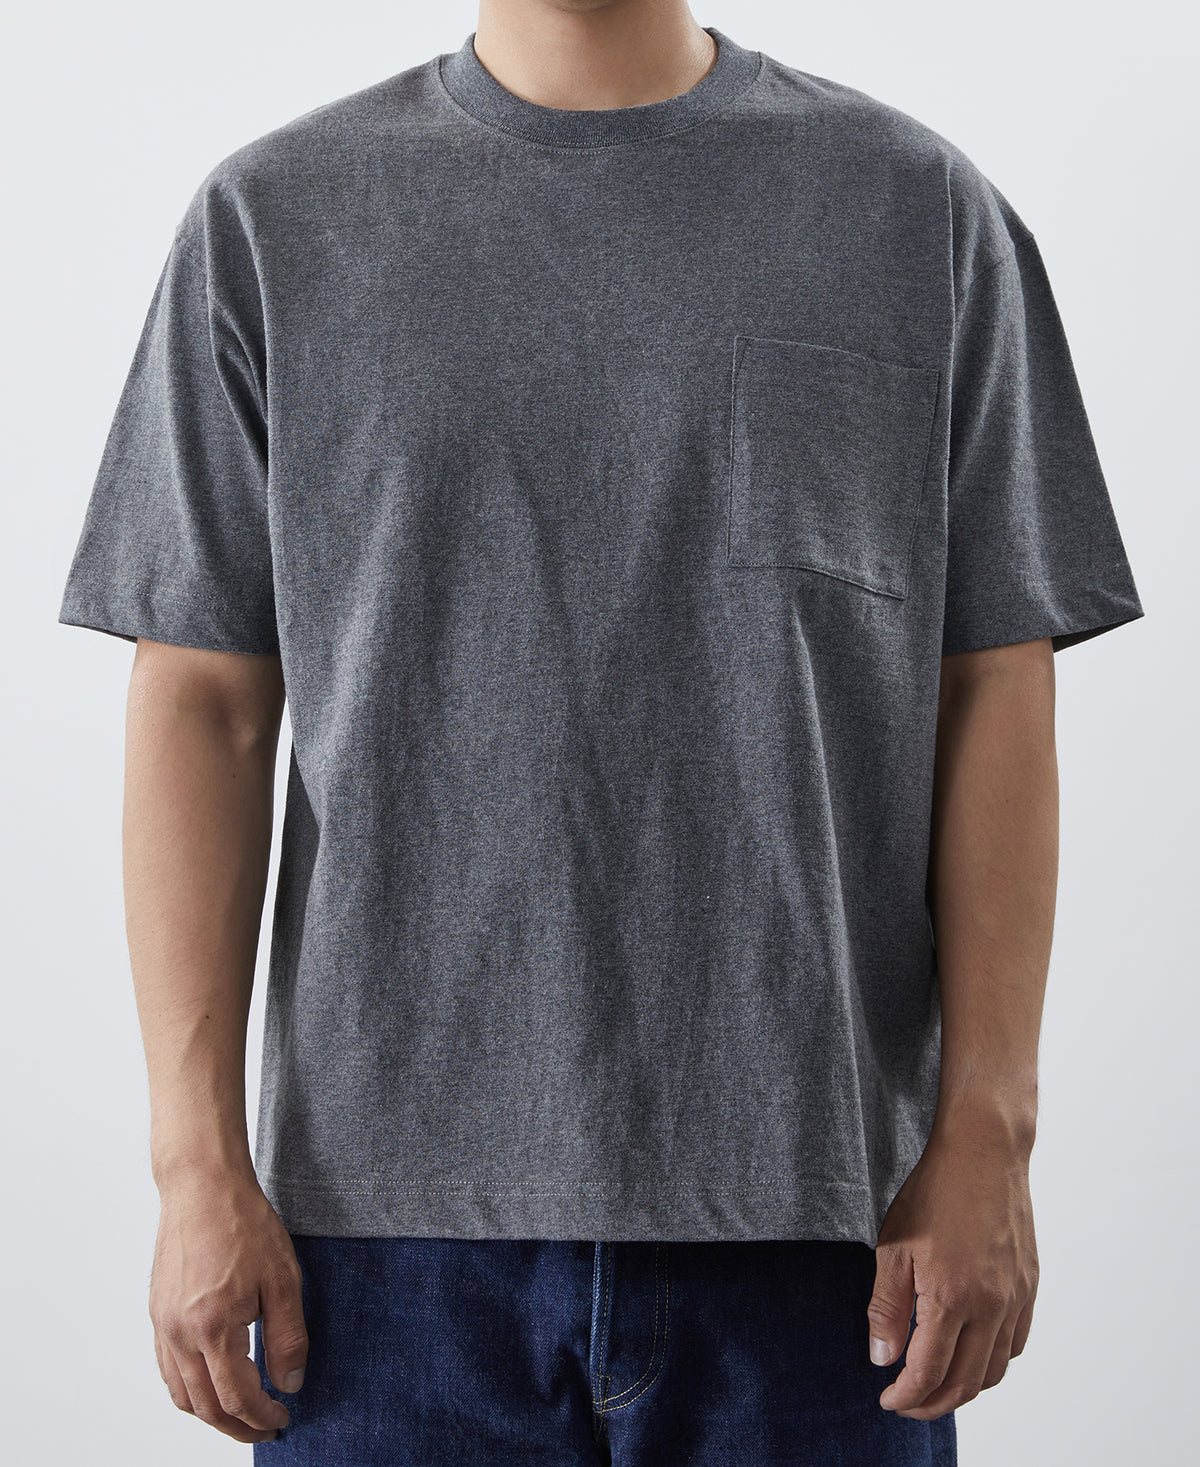 9.3 oz Cotton Oversize Tubular Pocket T-Shirt - Gray